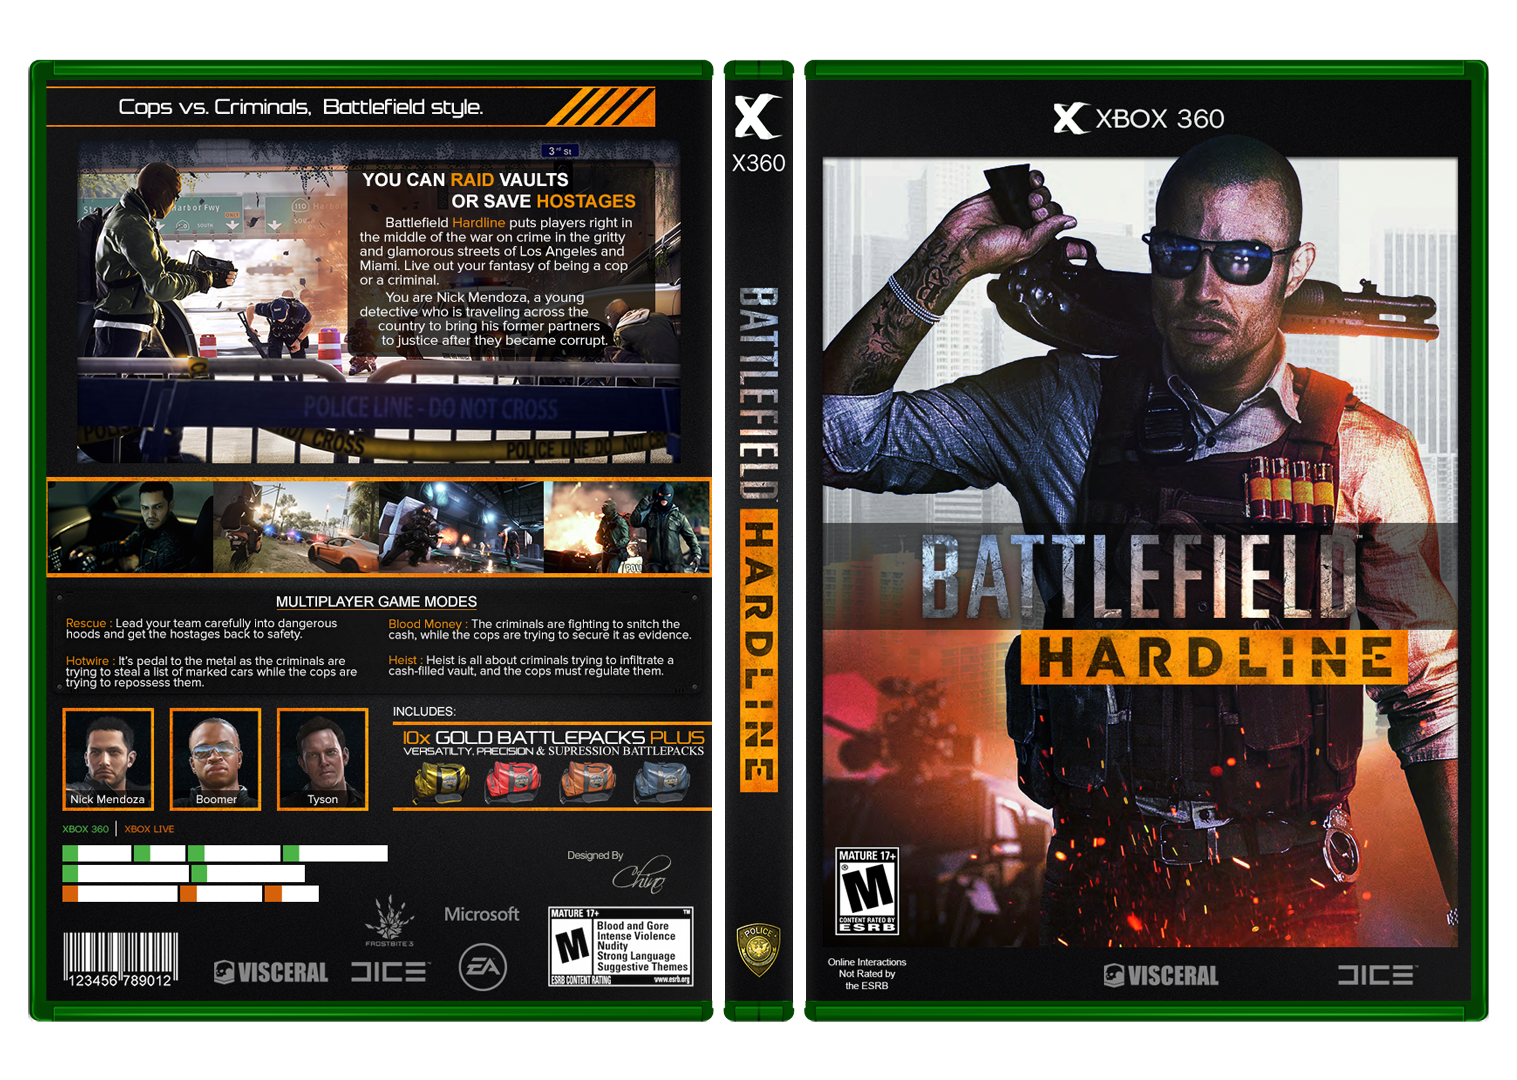 Battlefield HardLine box cover